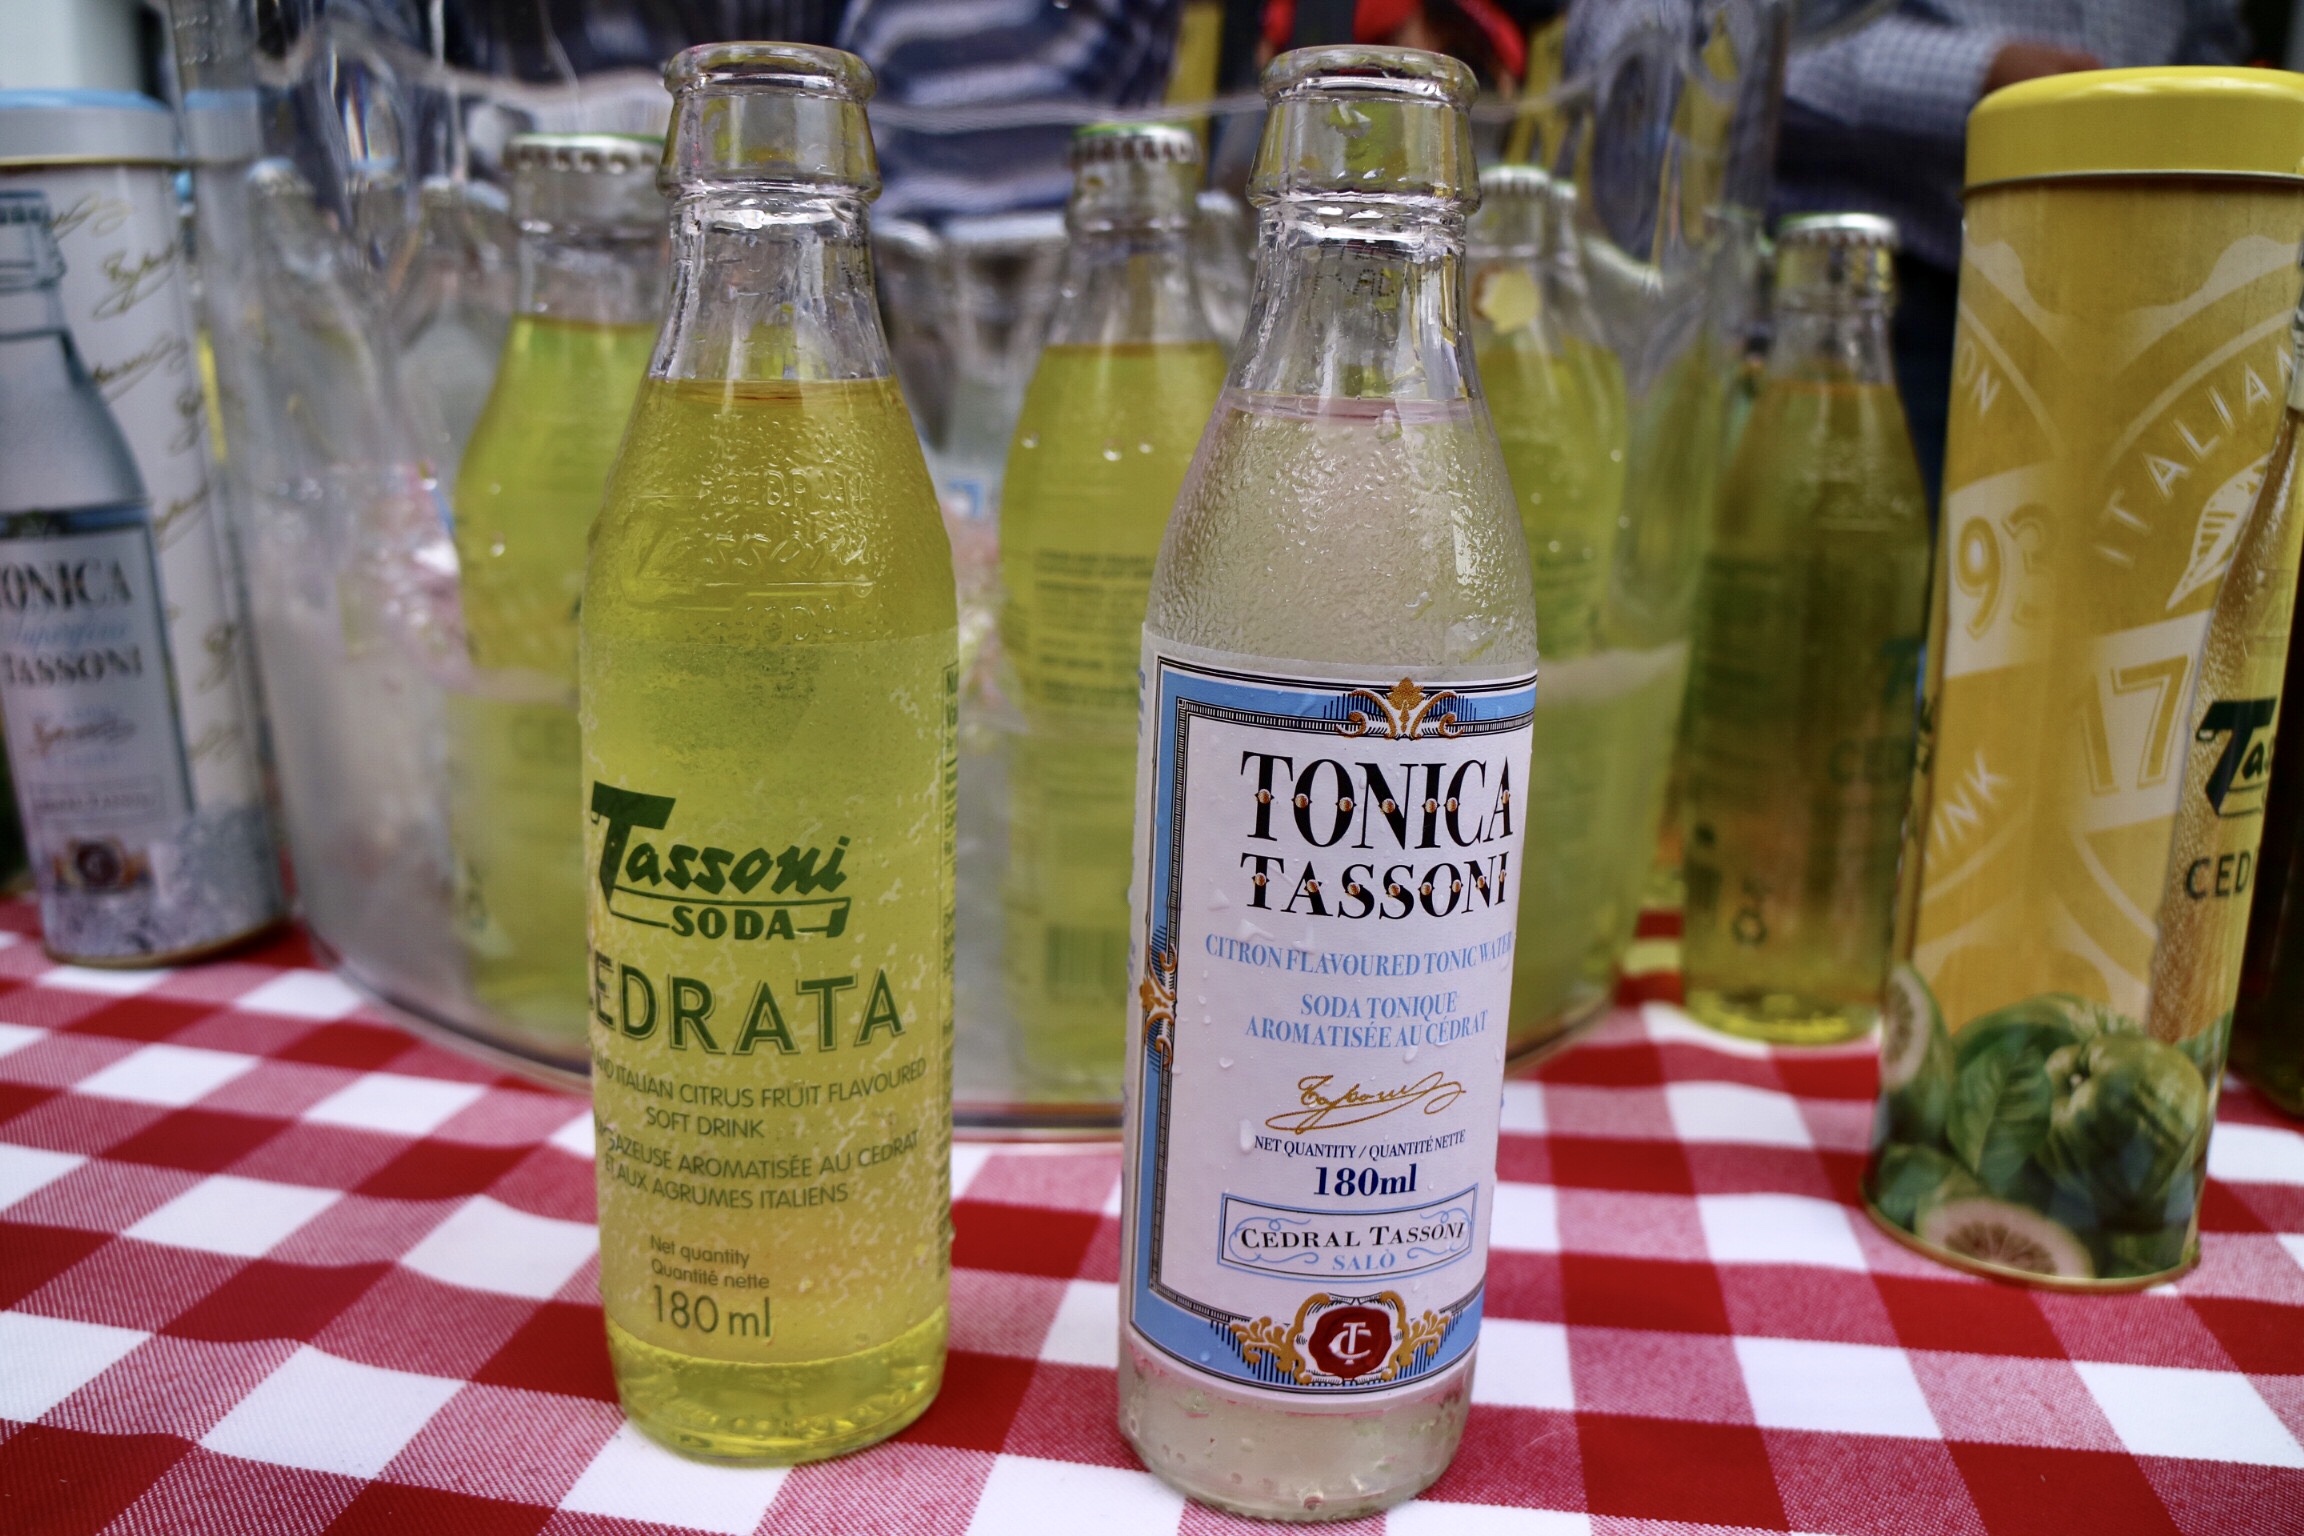 Citrus Soda and Tonic Water from CEDRATA TASSONI,